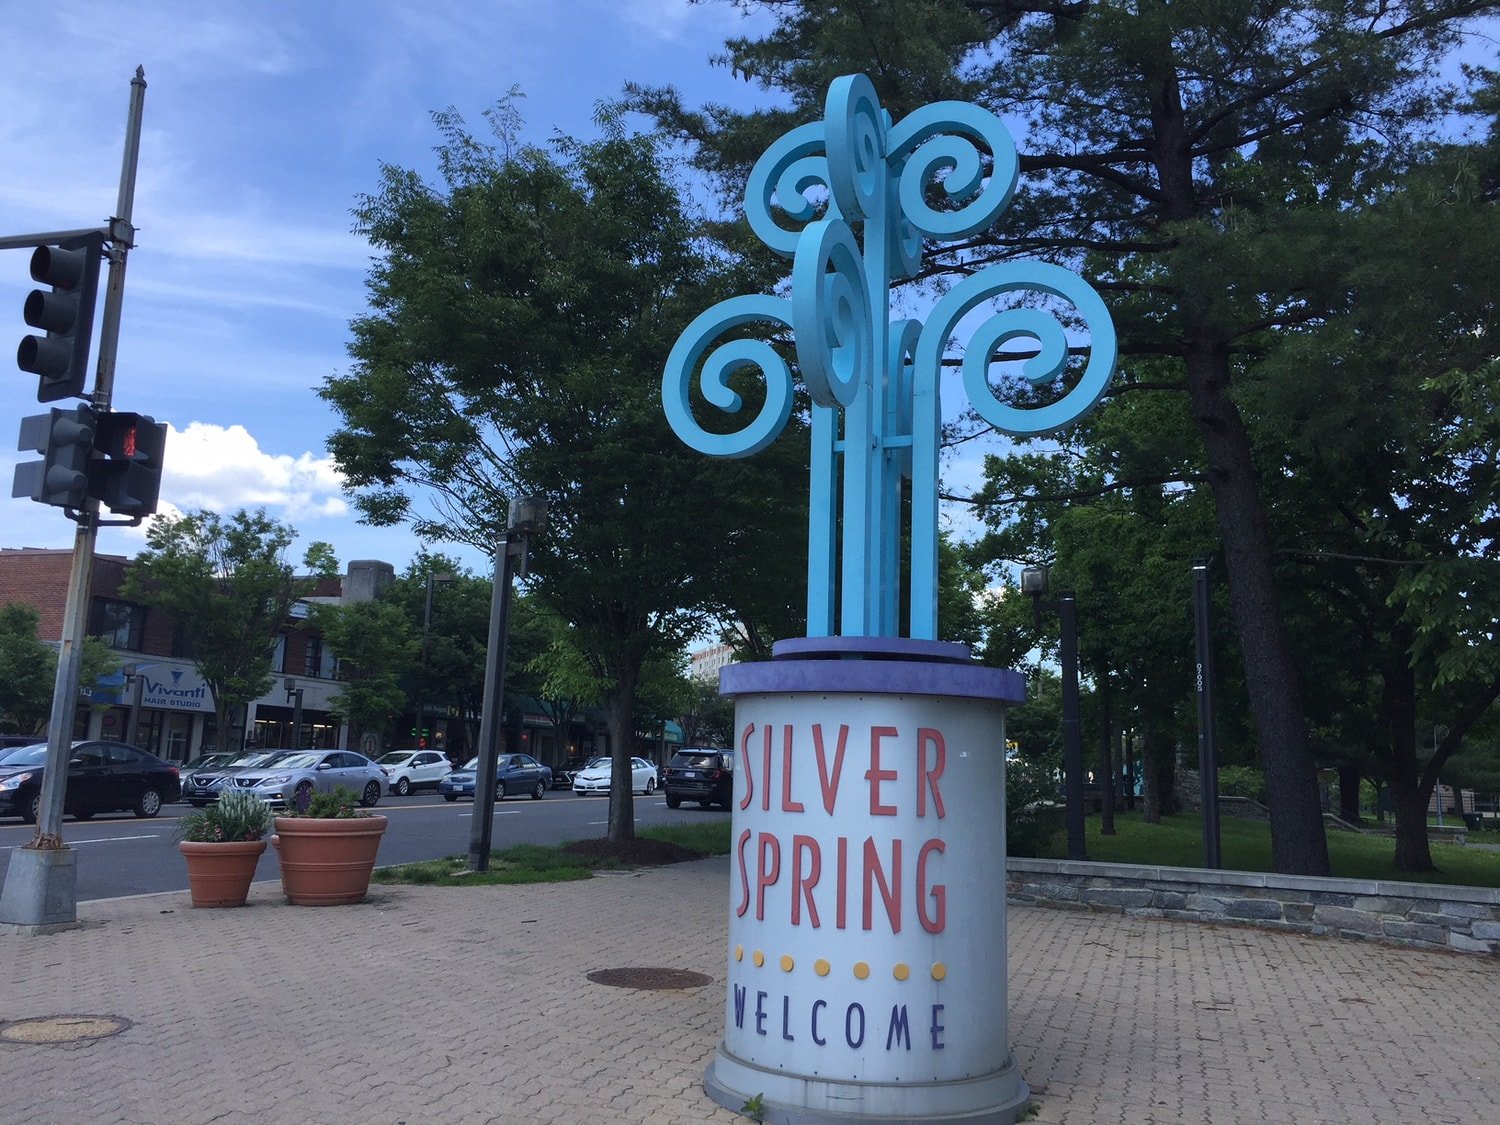 Silver Spring - Shepherd Park - Washington, DC